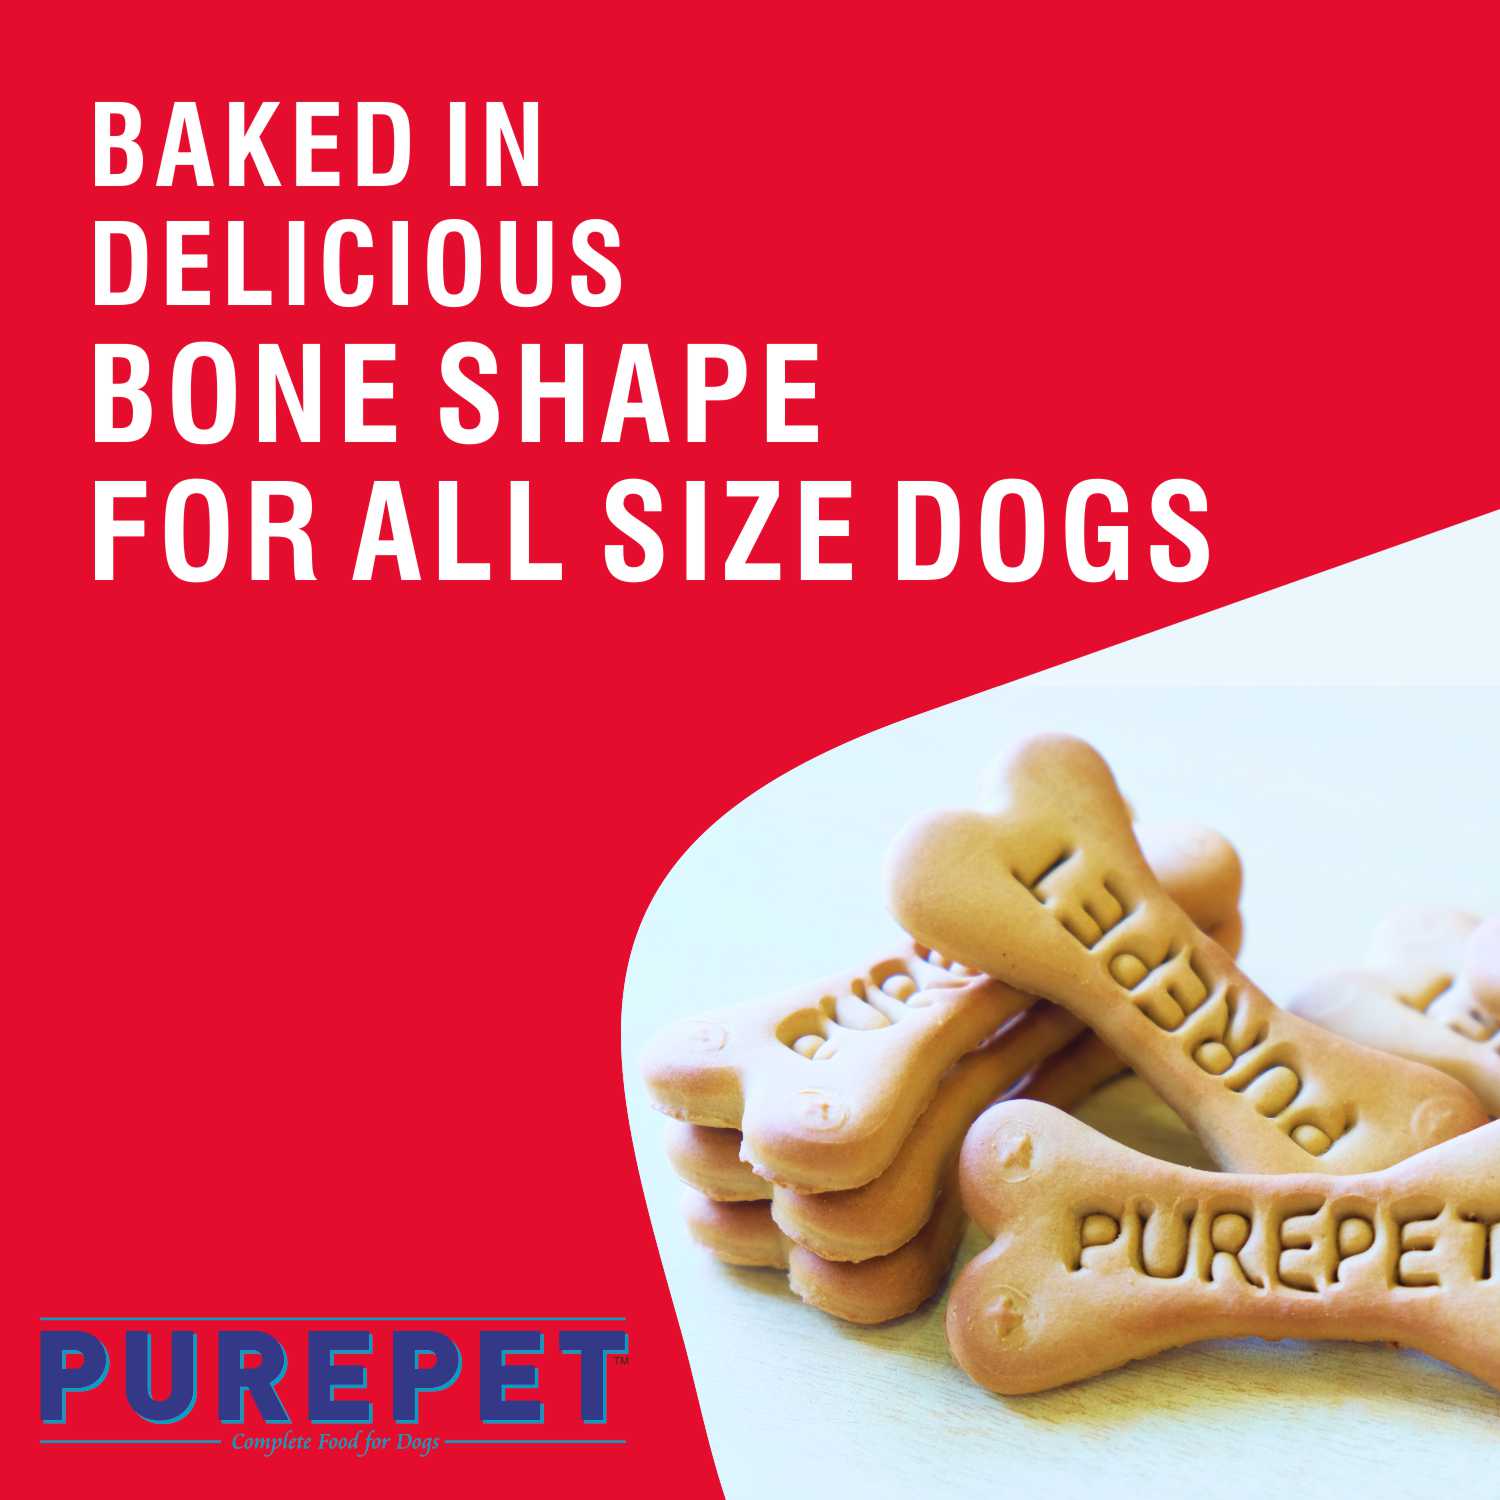 Purepet Milk Flavour Real Chicken Biscuit Dog Treats